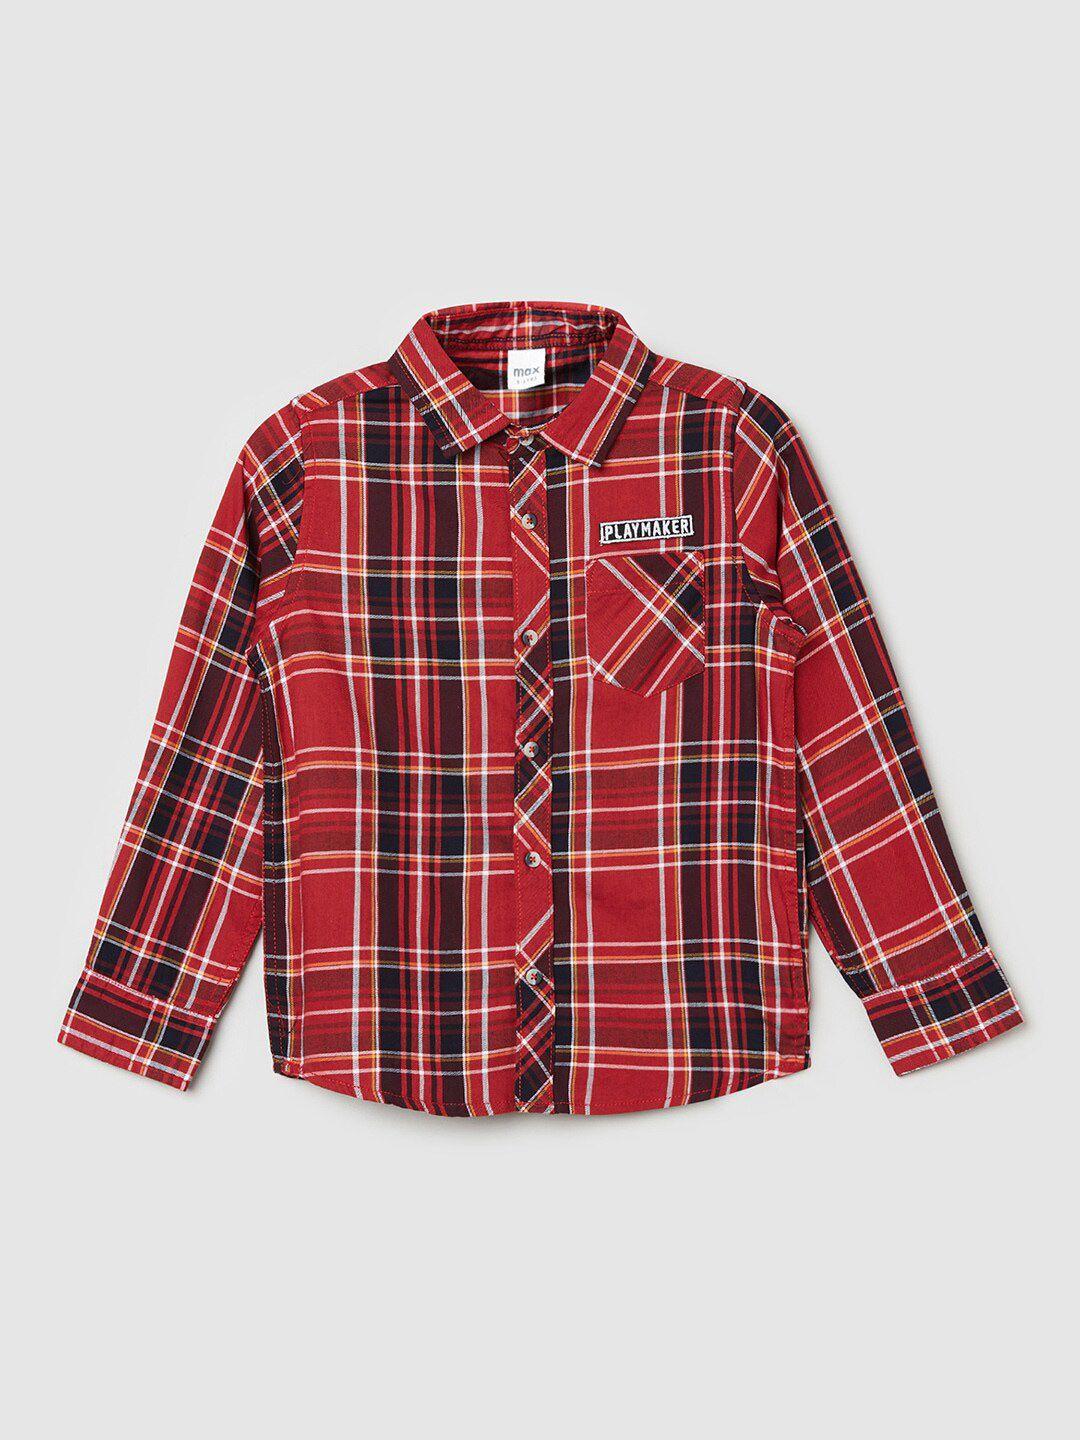 max-boys-red-tartan-checks-checked-casual-shirt